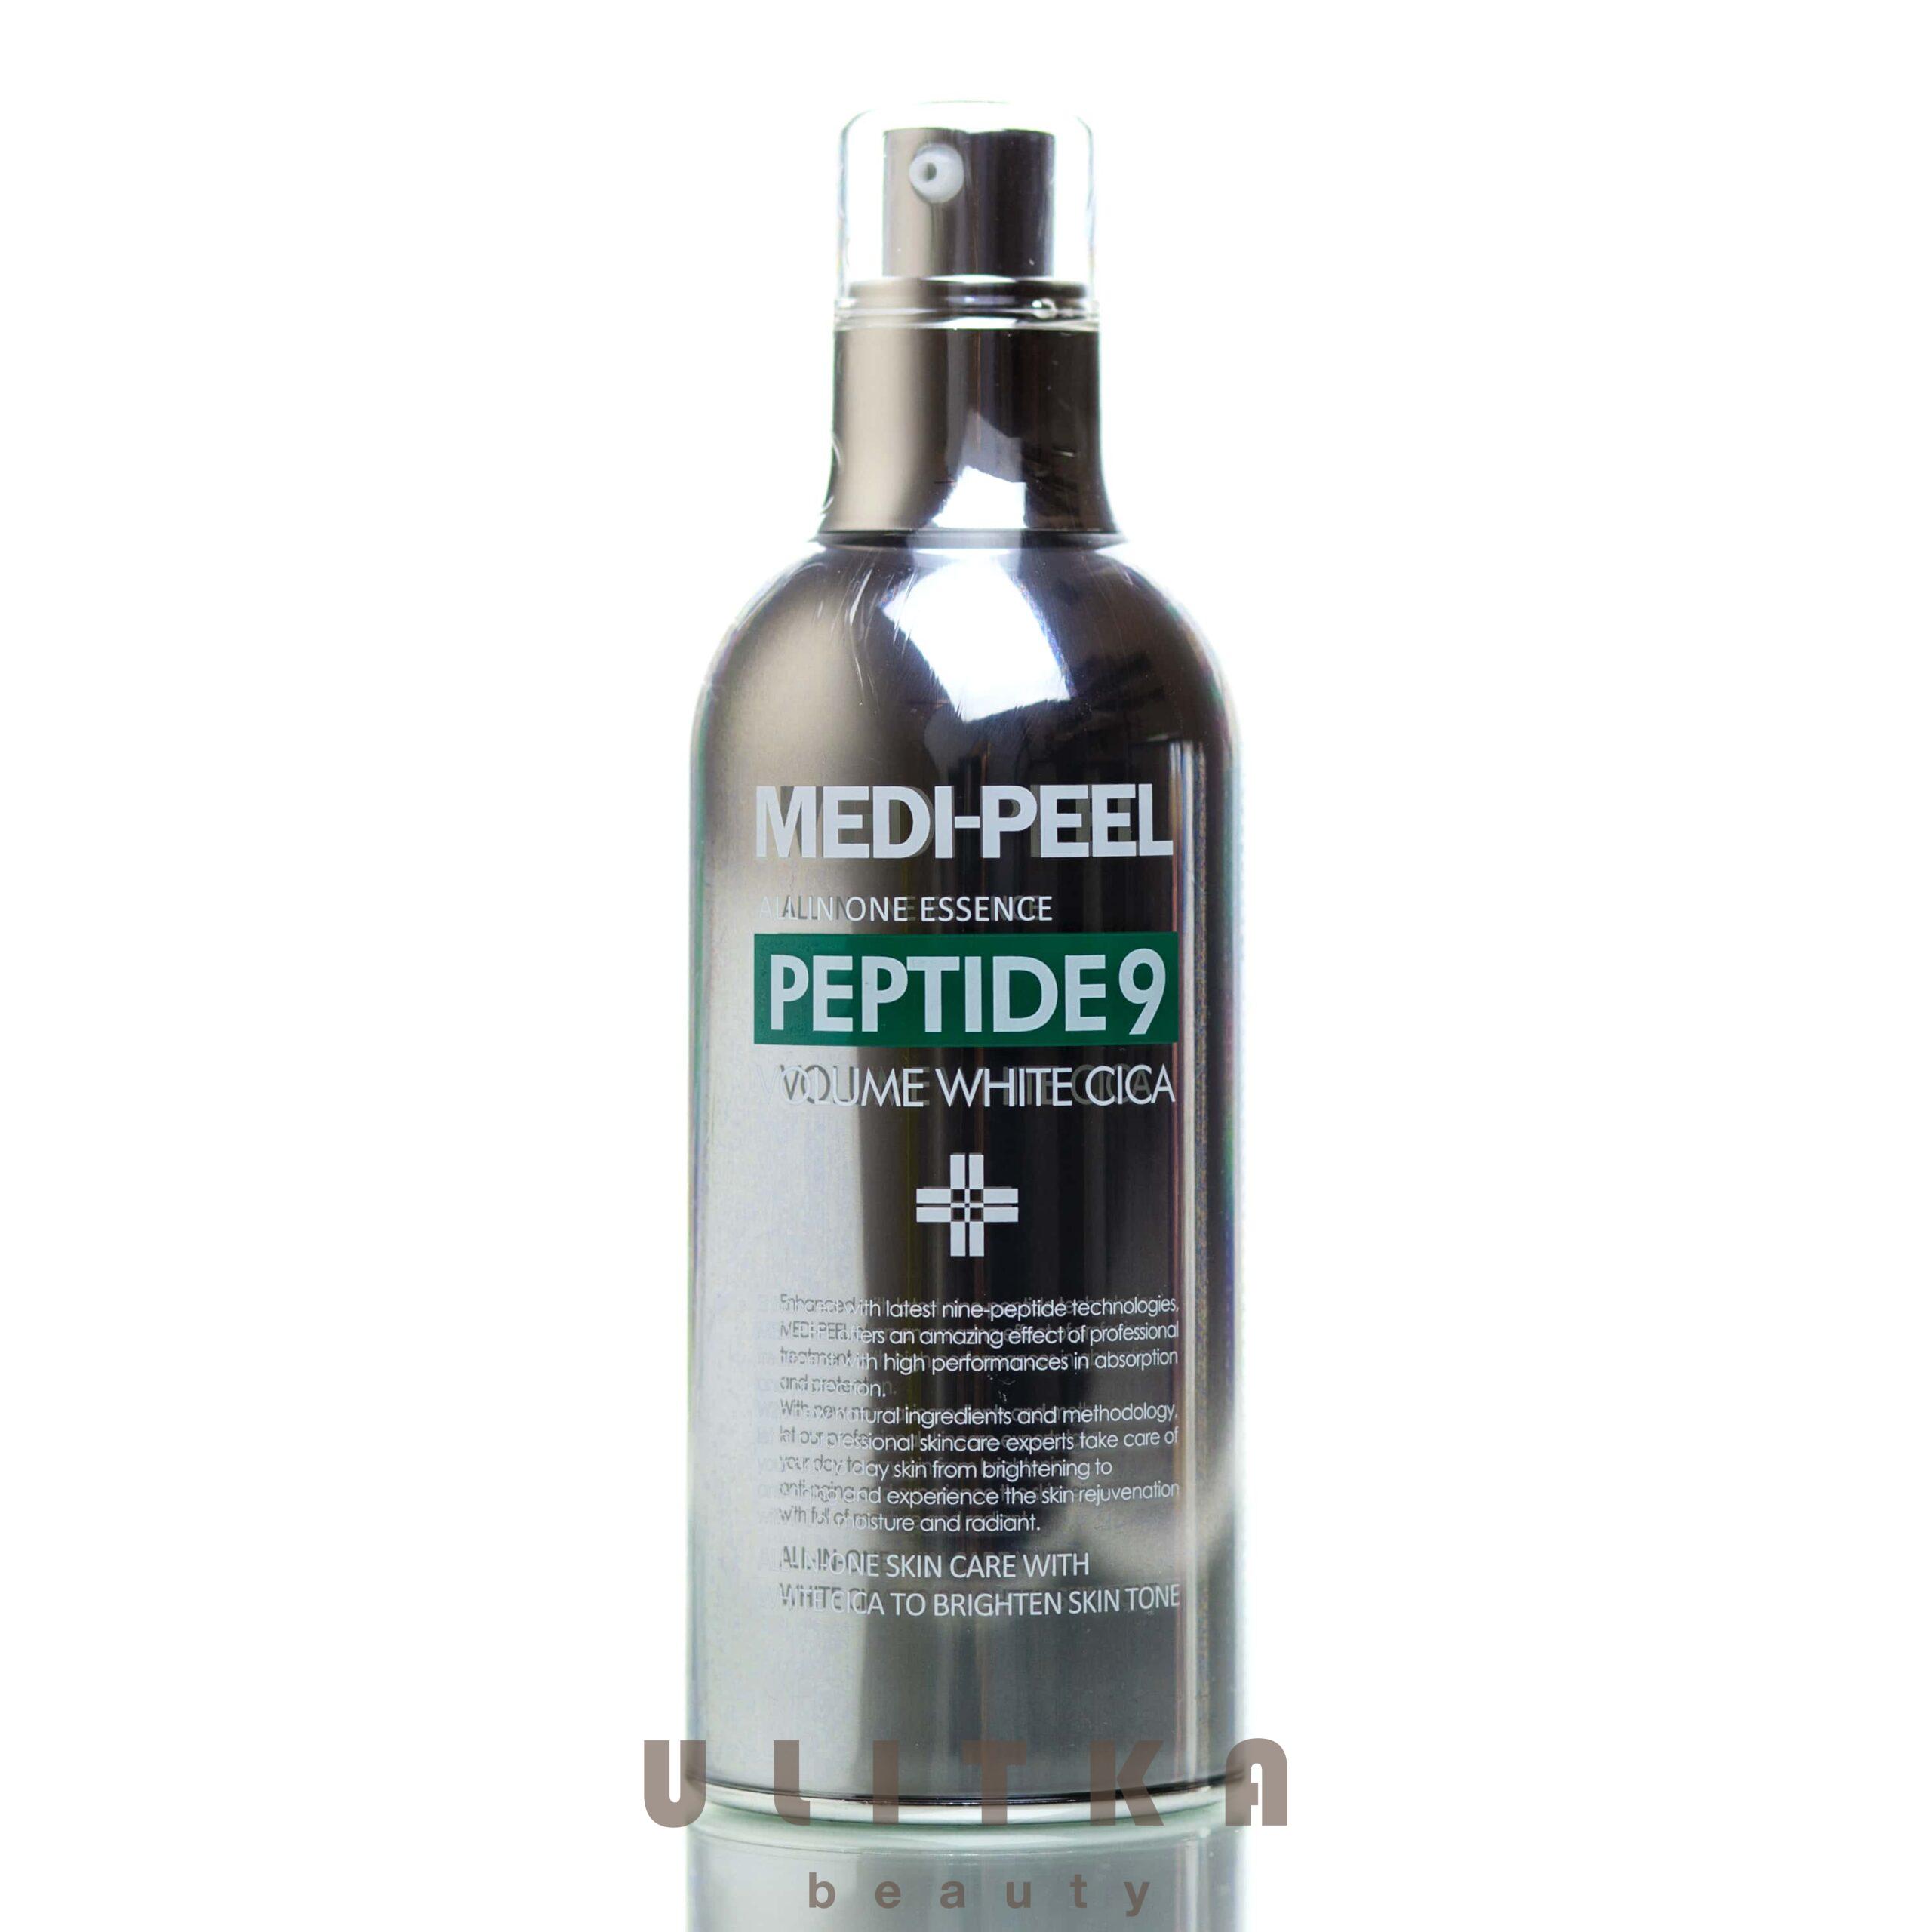 Peptide 9 volume essence. Peptide9 Volume White cica. Medi Peel Peptide 9 Volume Essence. Medi-Peel Peptide 9 Volume Essence, 100мл. Medi-Peel all in one Essence Peptide 9 Volume White cica.